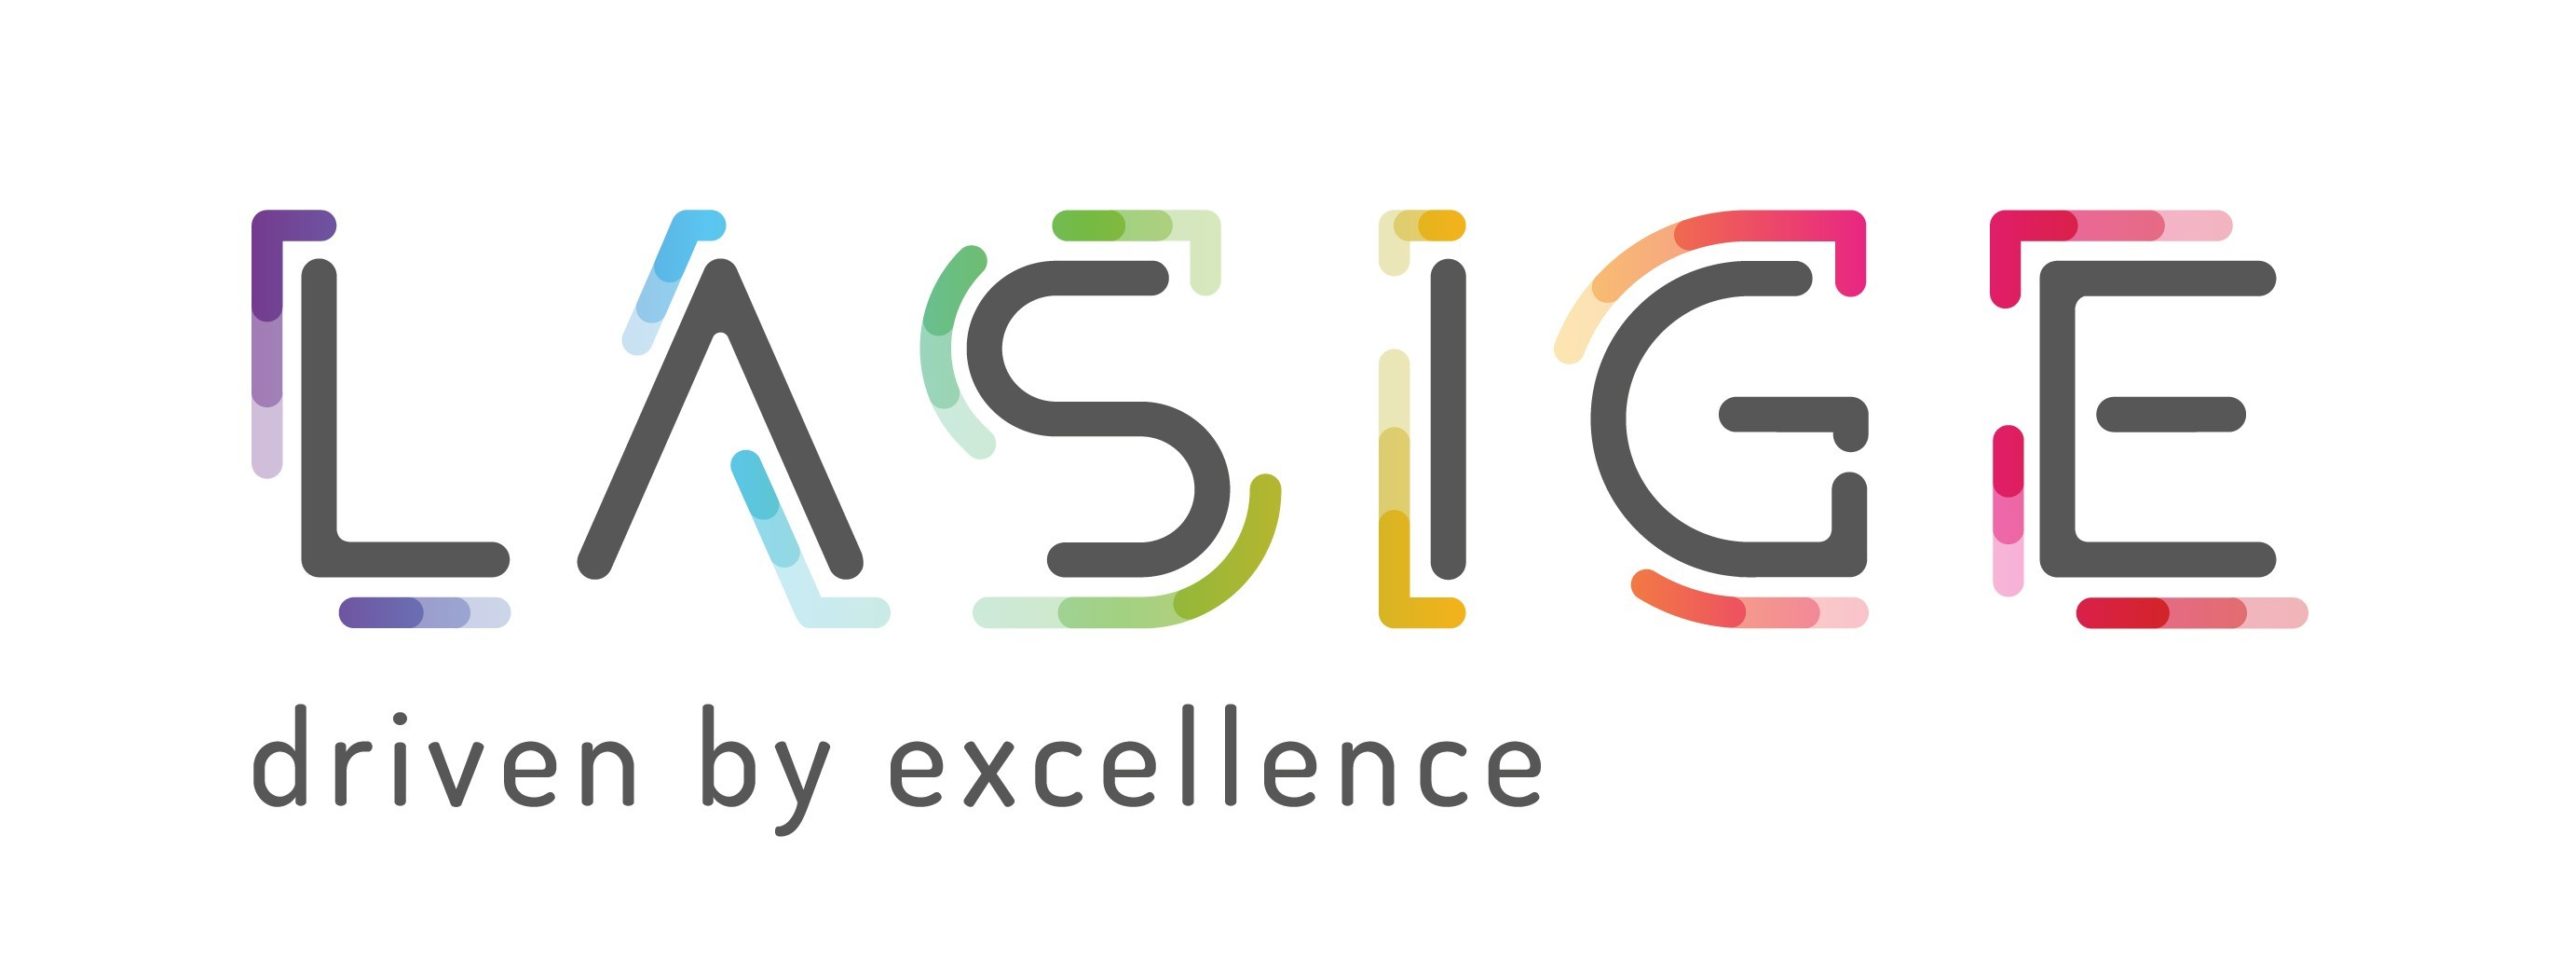 Lasige Logo scaled jpg